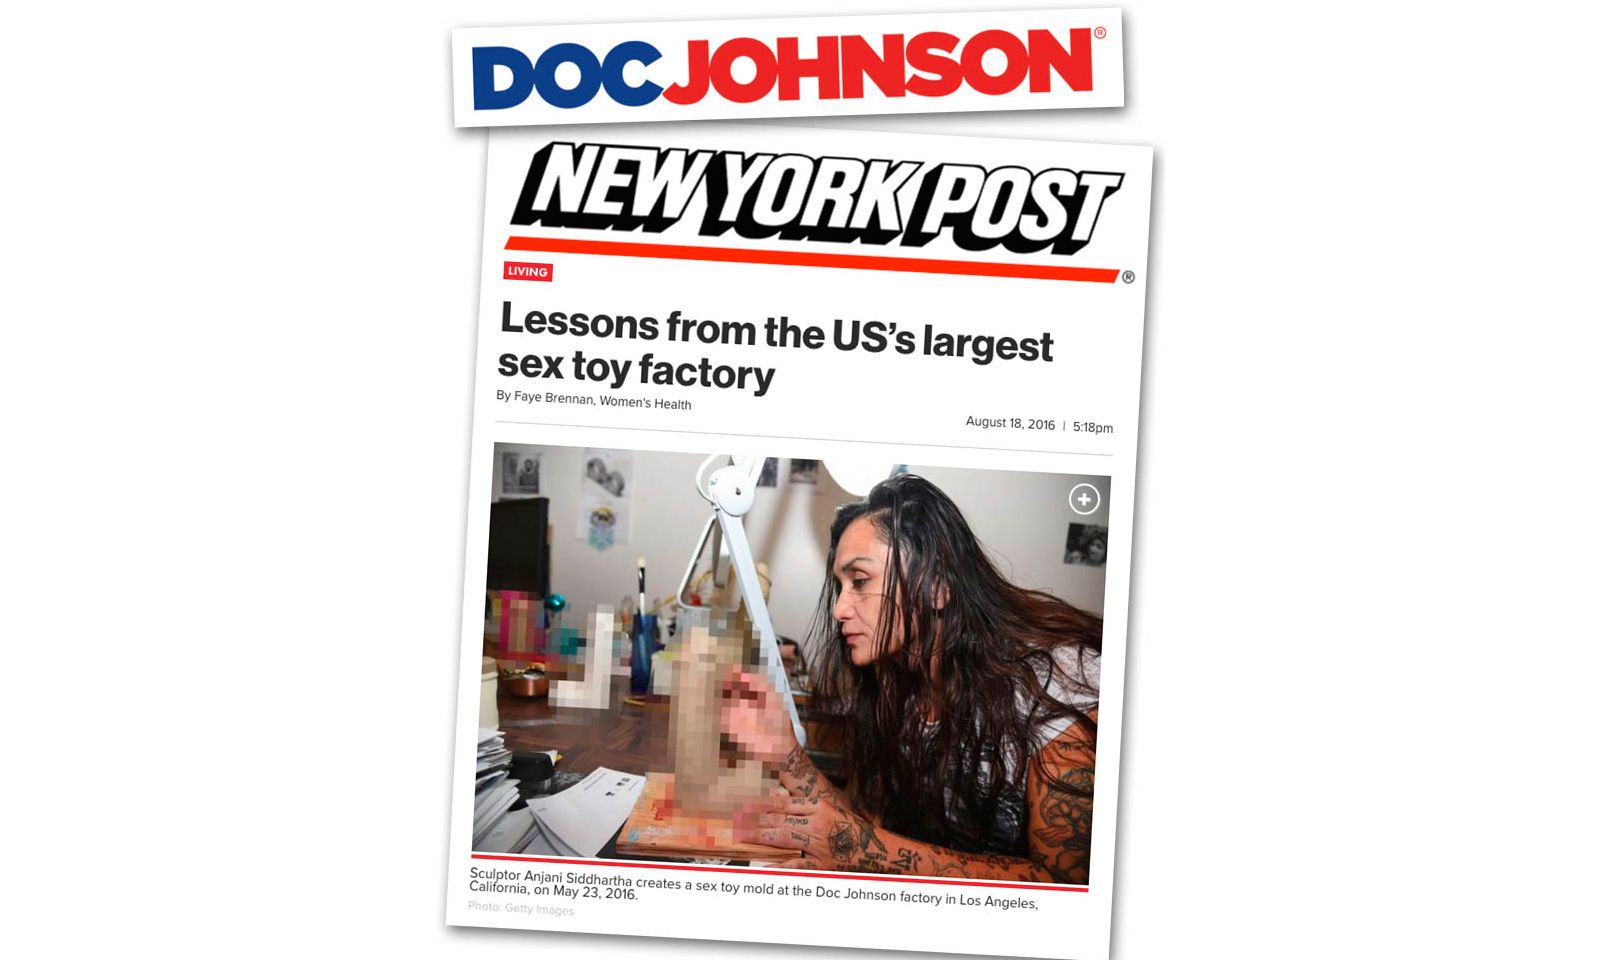 New York Post Profiles Doc Johnson